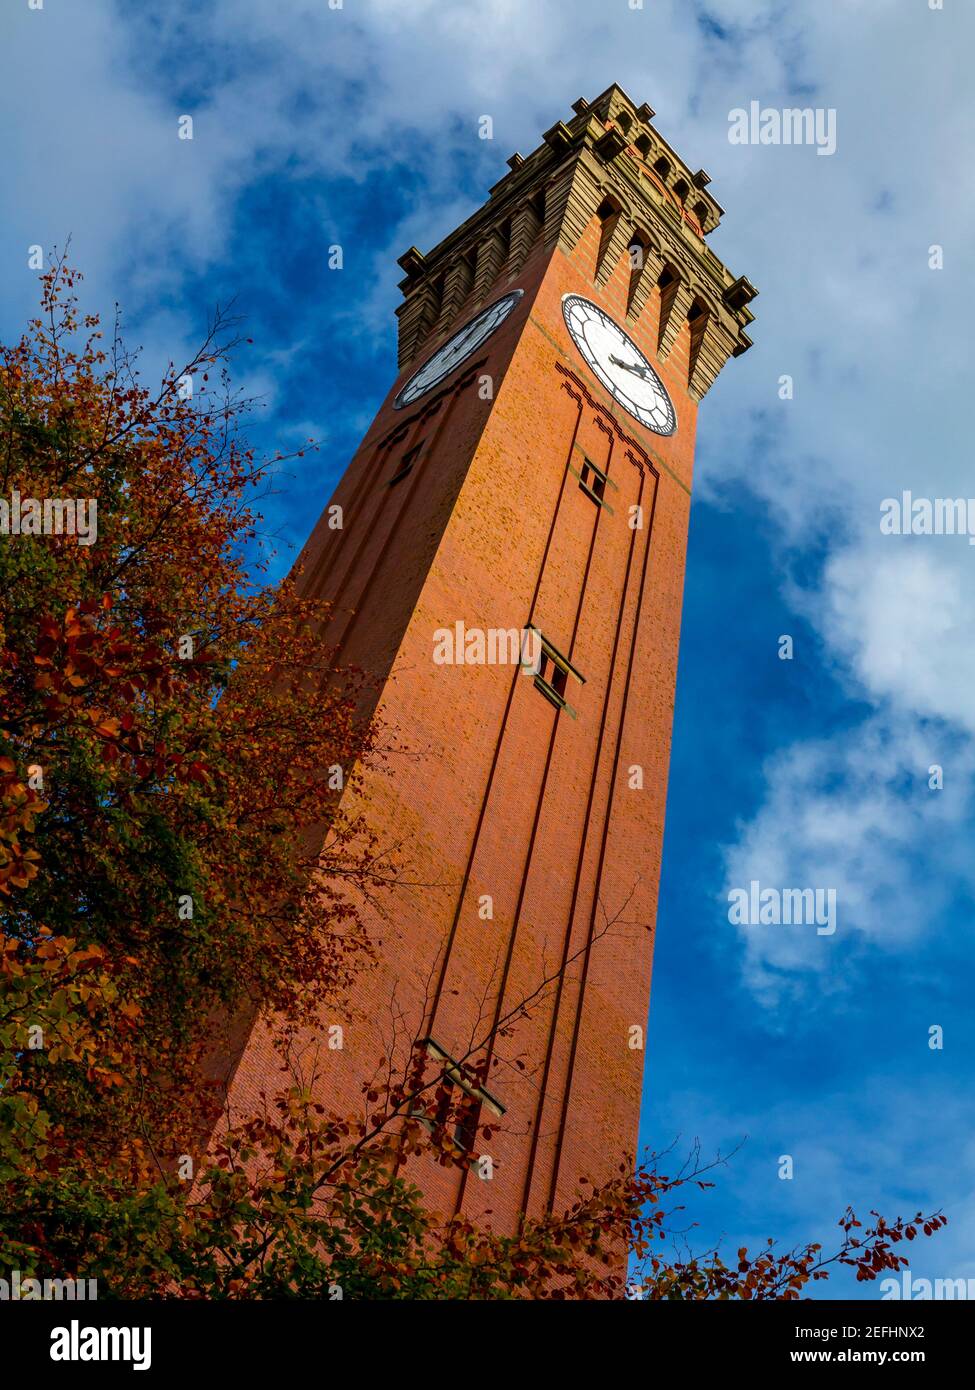 The Joseph Chamberlain Memorial Clock Tower at the University of Birmingham Edgbaston UK the tallest clock tower in the world built 1900-1908 Stock Photo